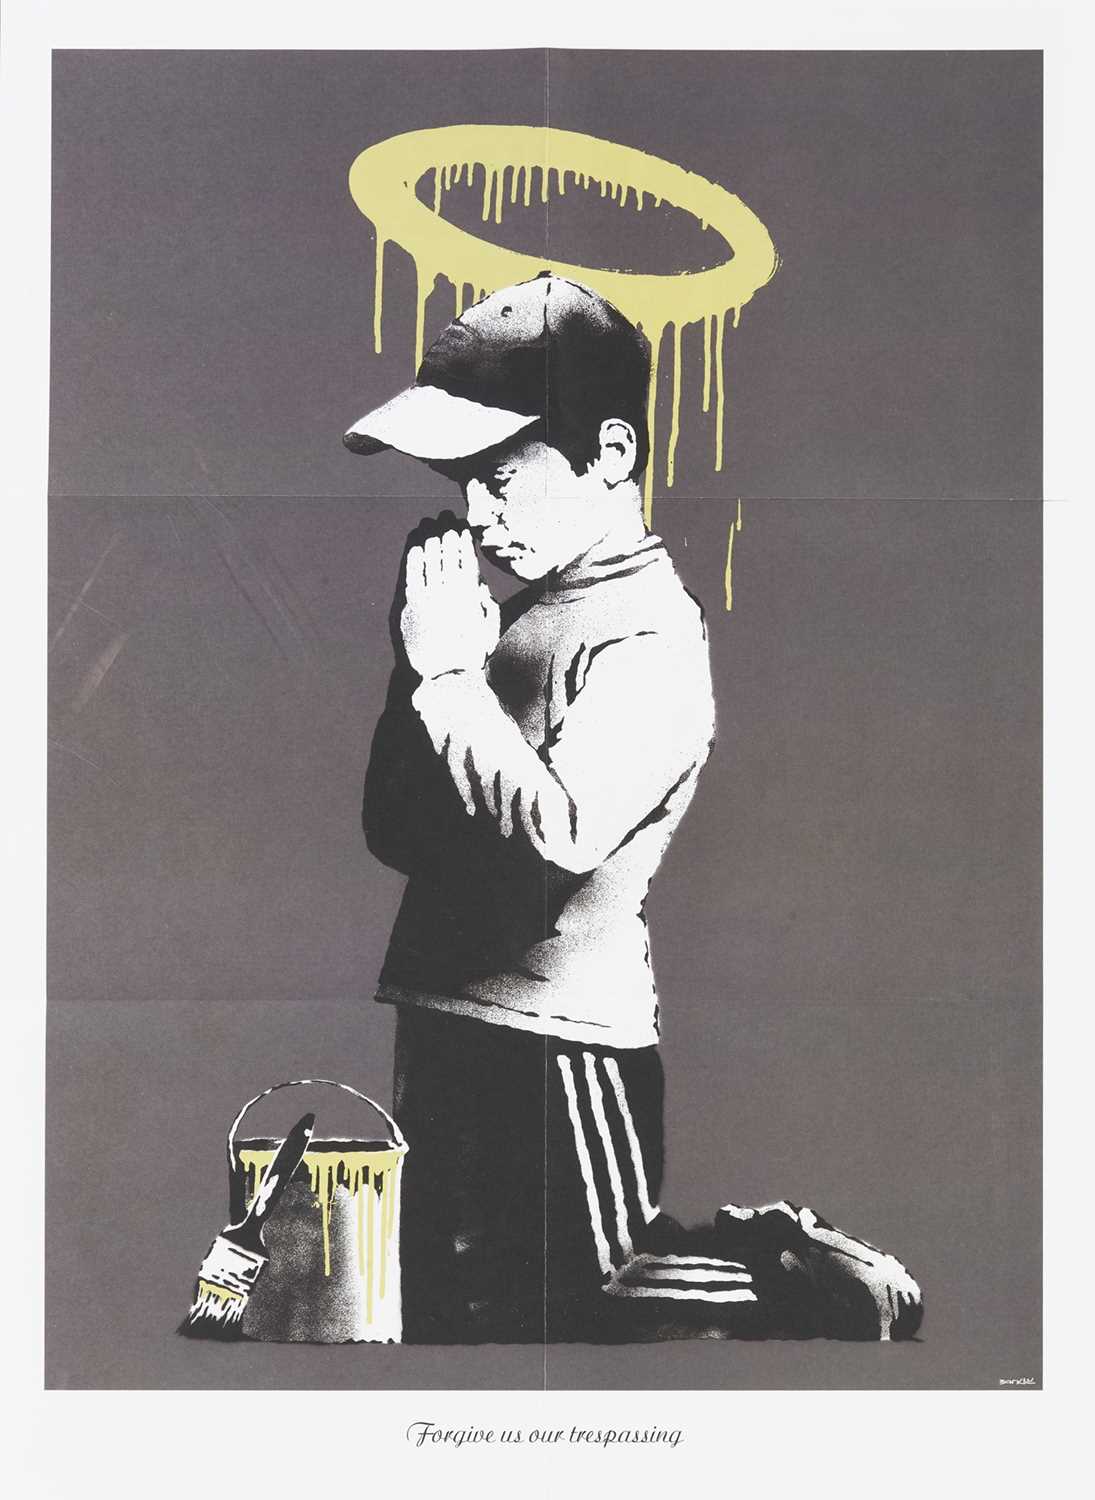 Lot 71 - Banksy (British 1974-), ‘Forgive Us Our Trespassing’, 2010